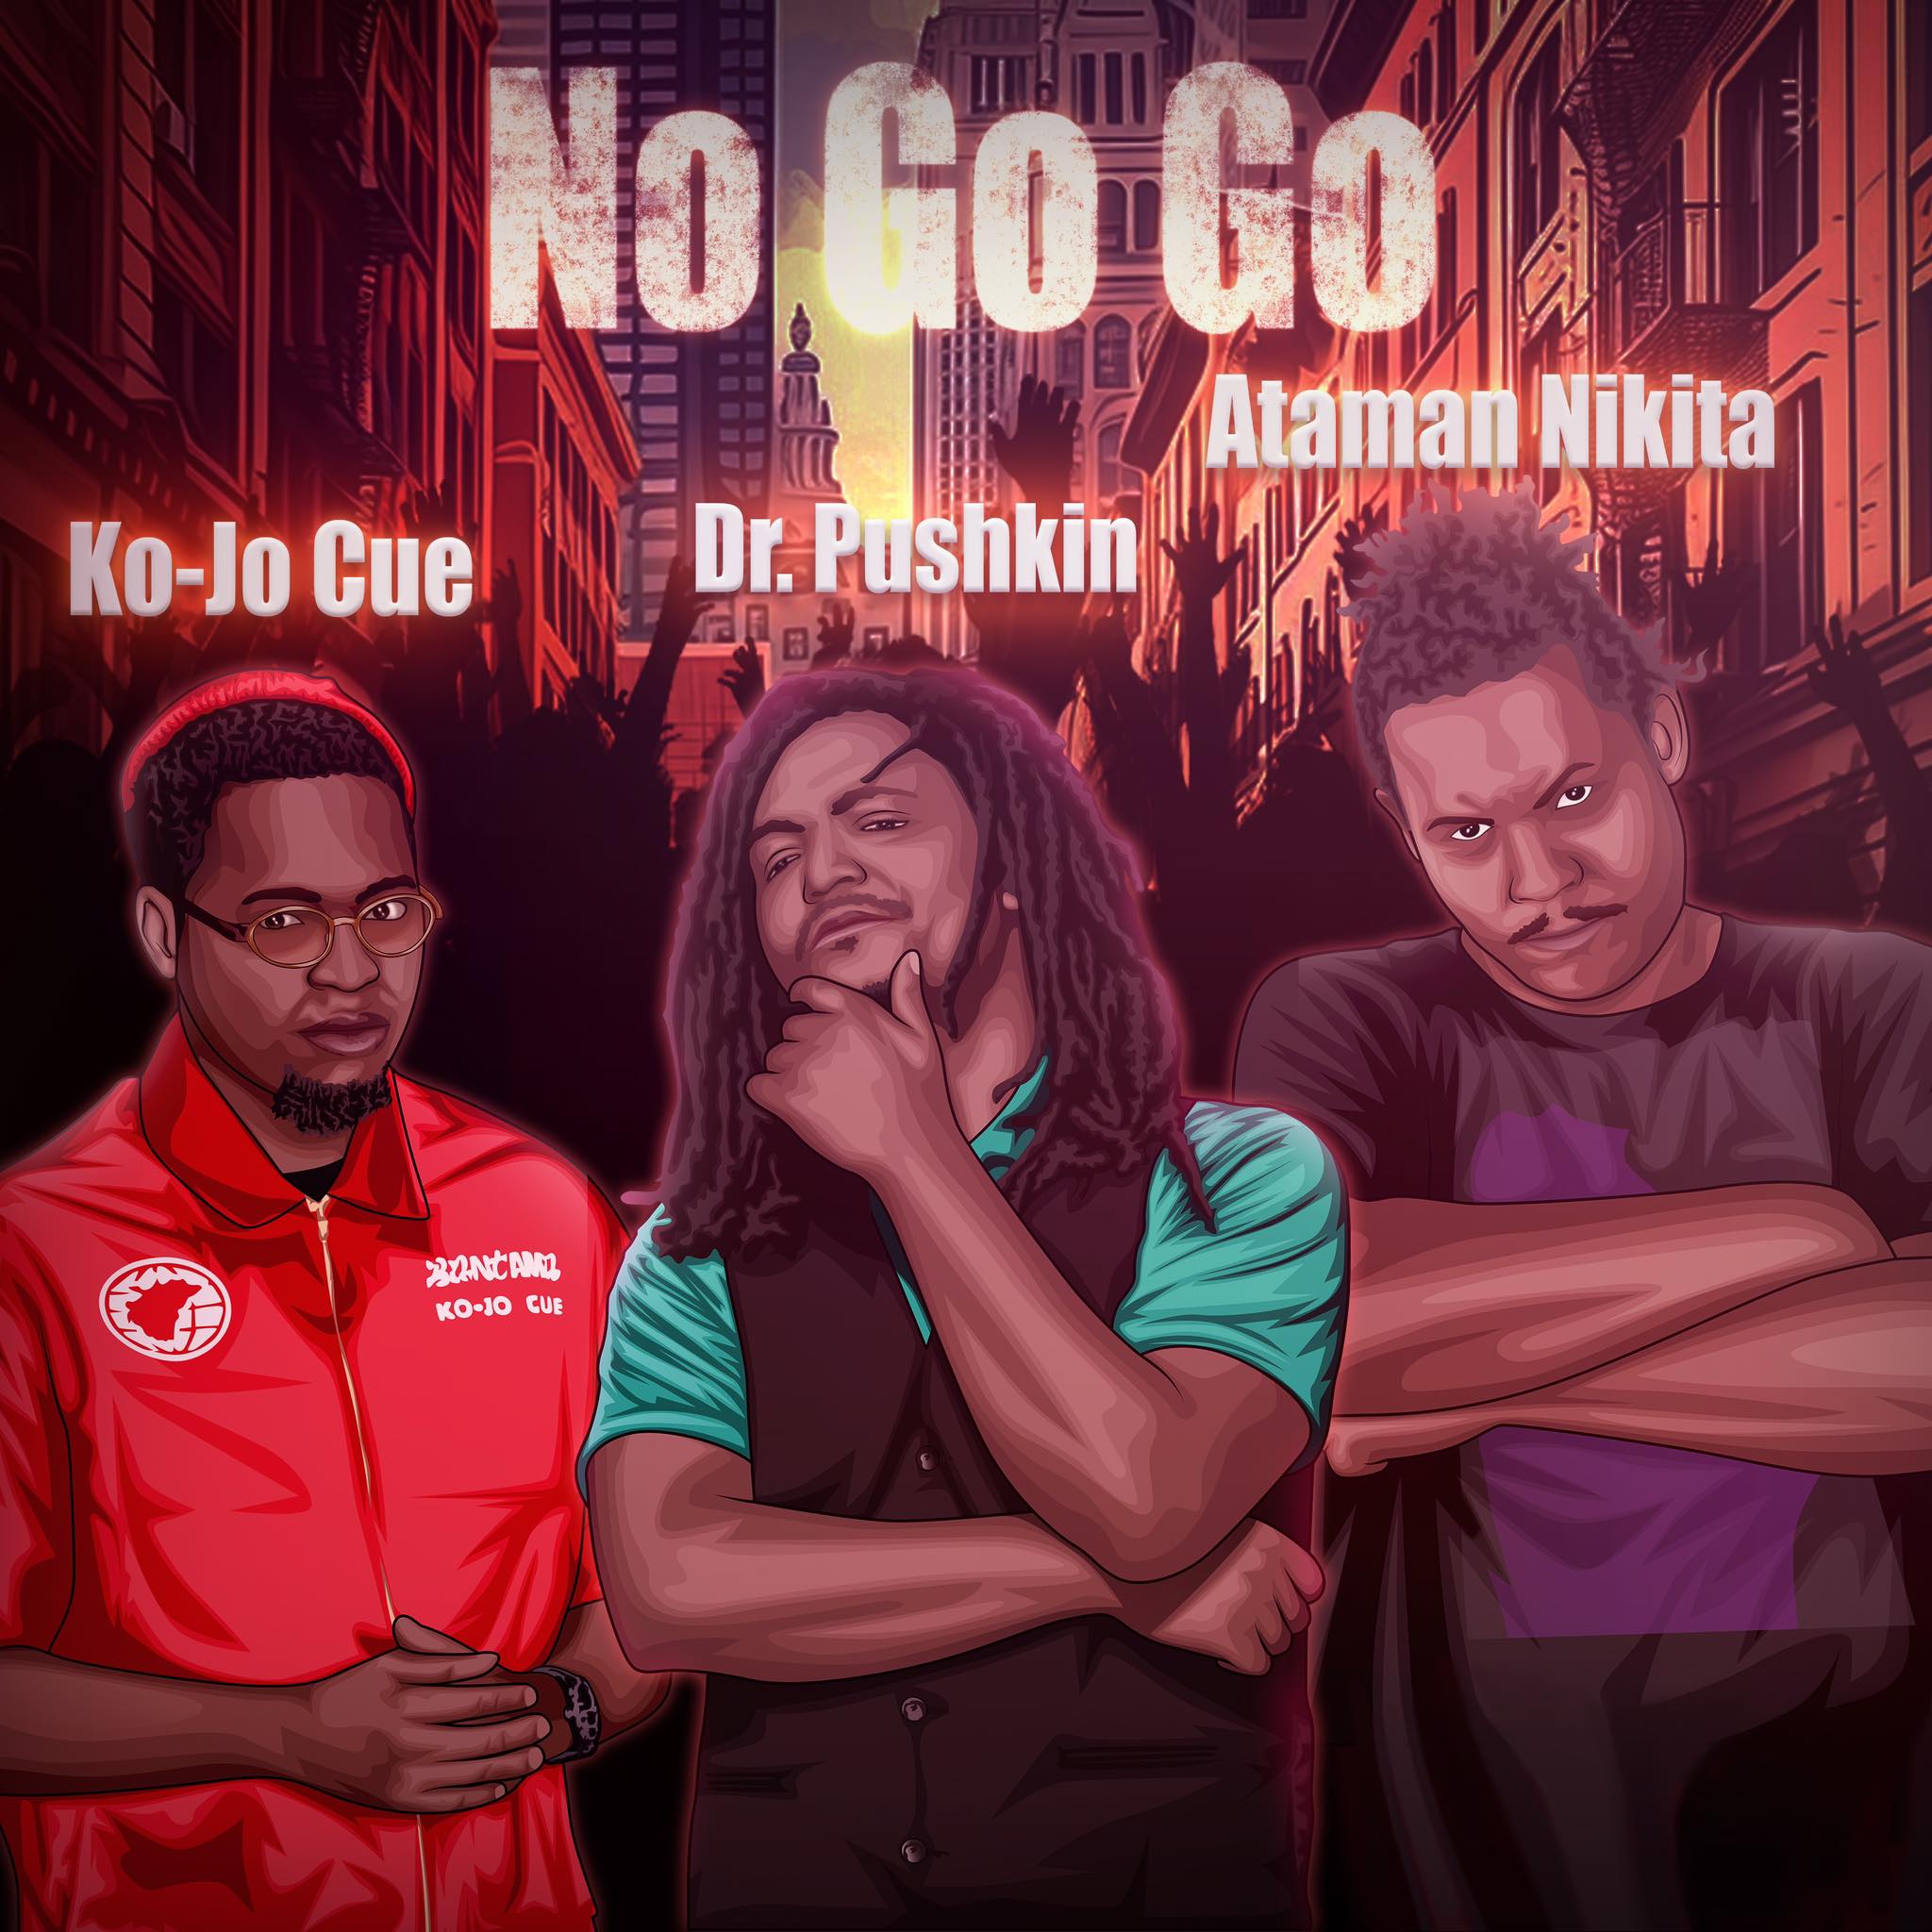 artwork for No Go Go by Dr Pushkin featuring Ataman Nikita and Ko-Jo Cue